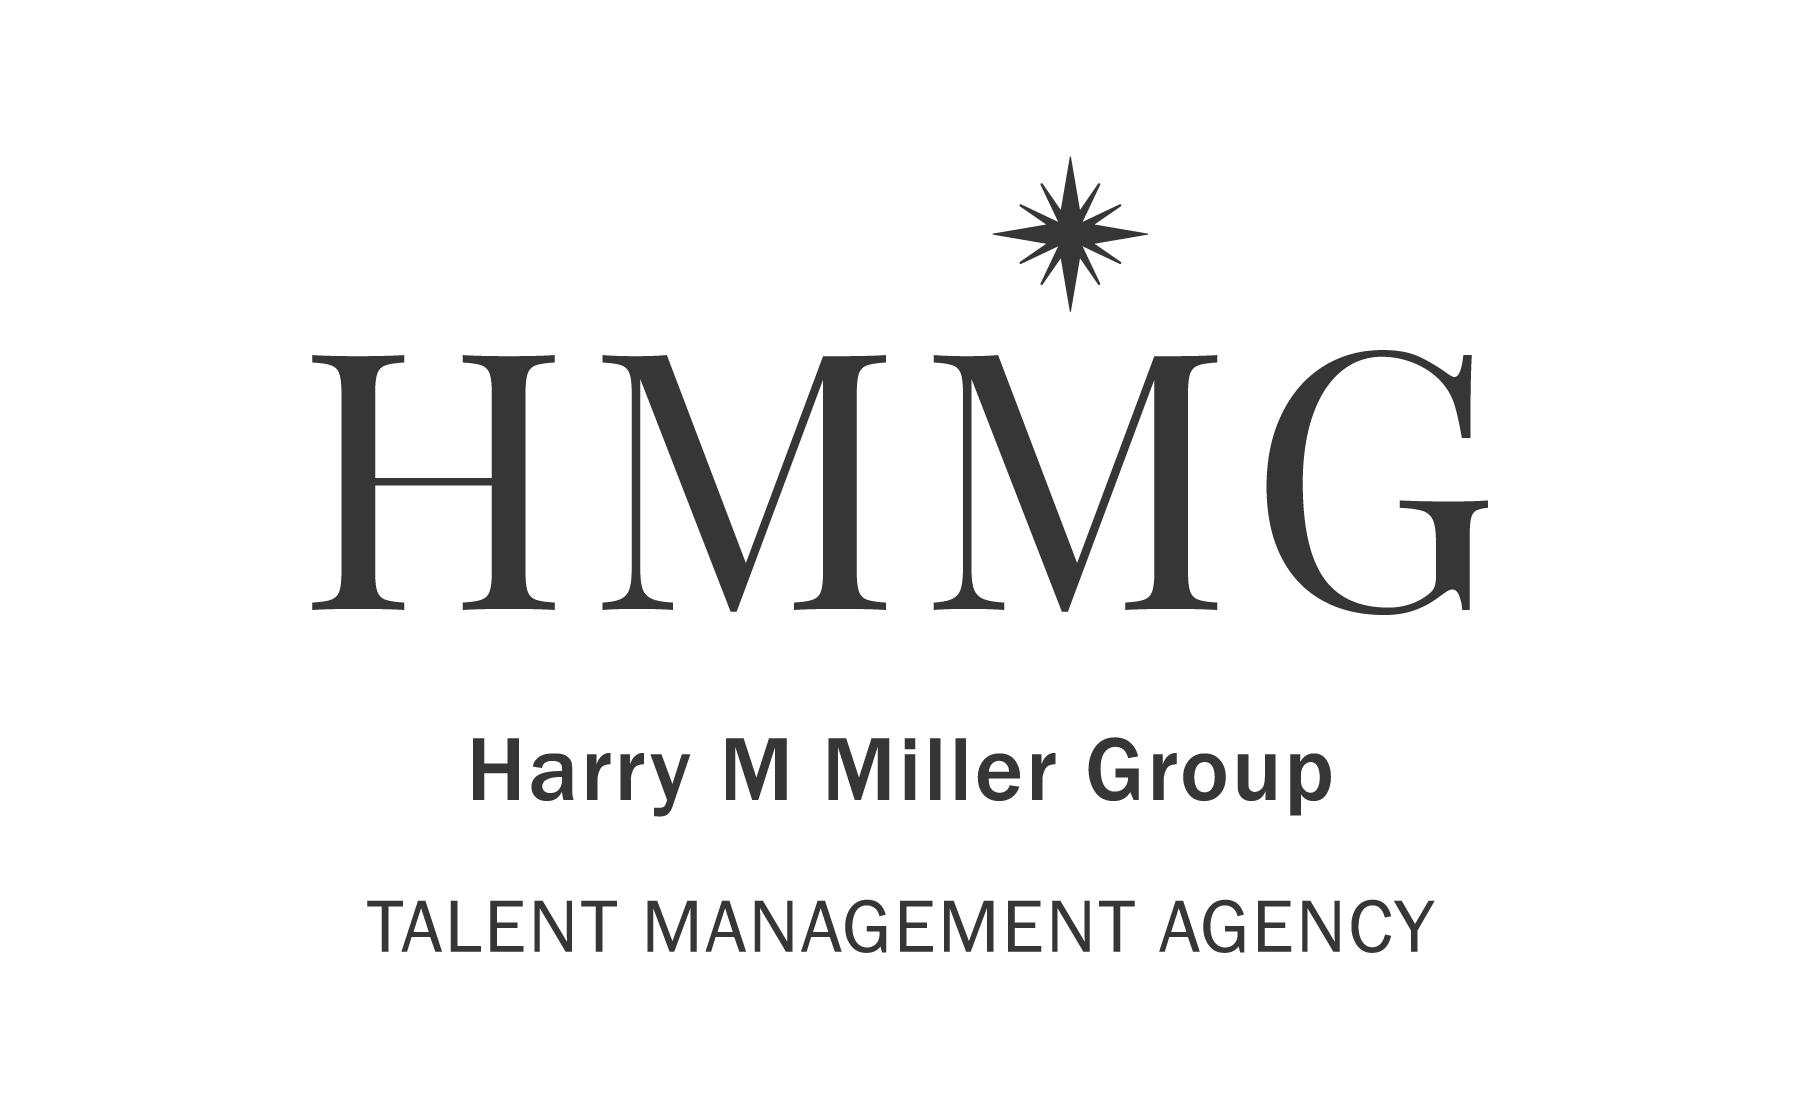 Harry M Miller Group